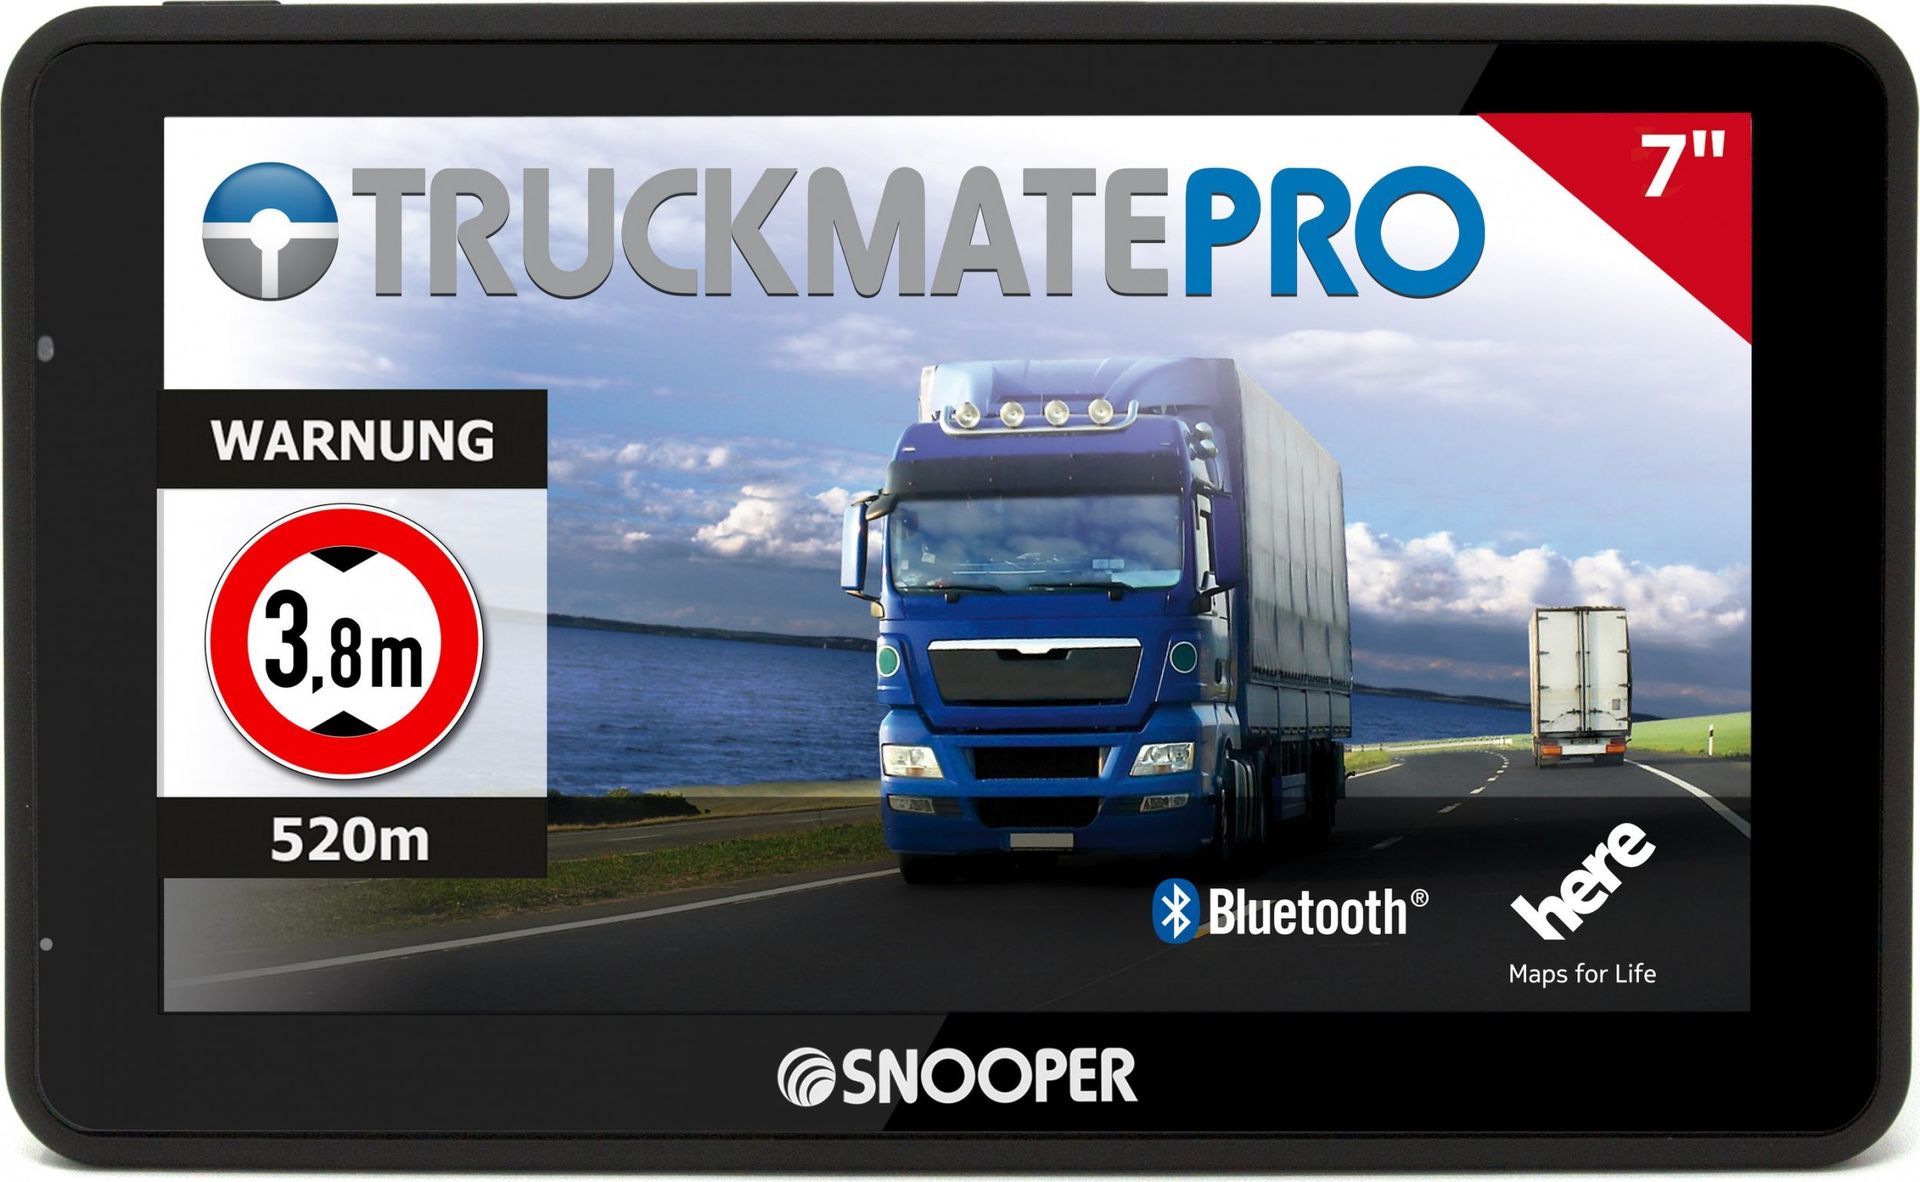 Snooper Truckmate PRO S6900 LKW-Navigationssystem